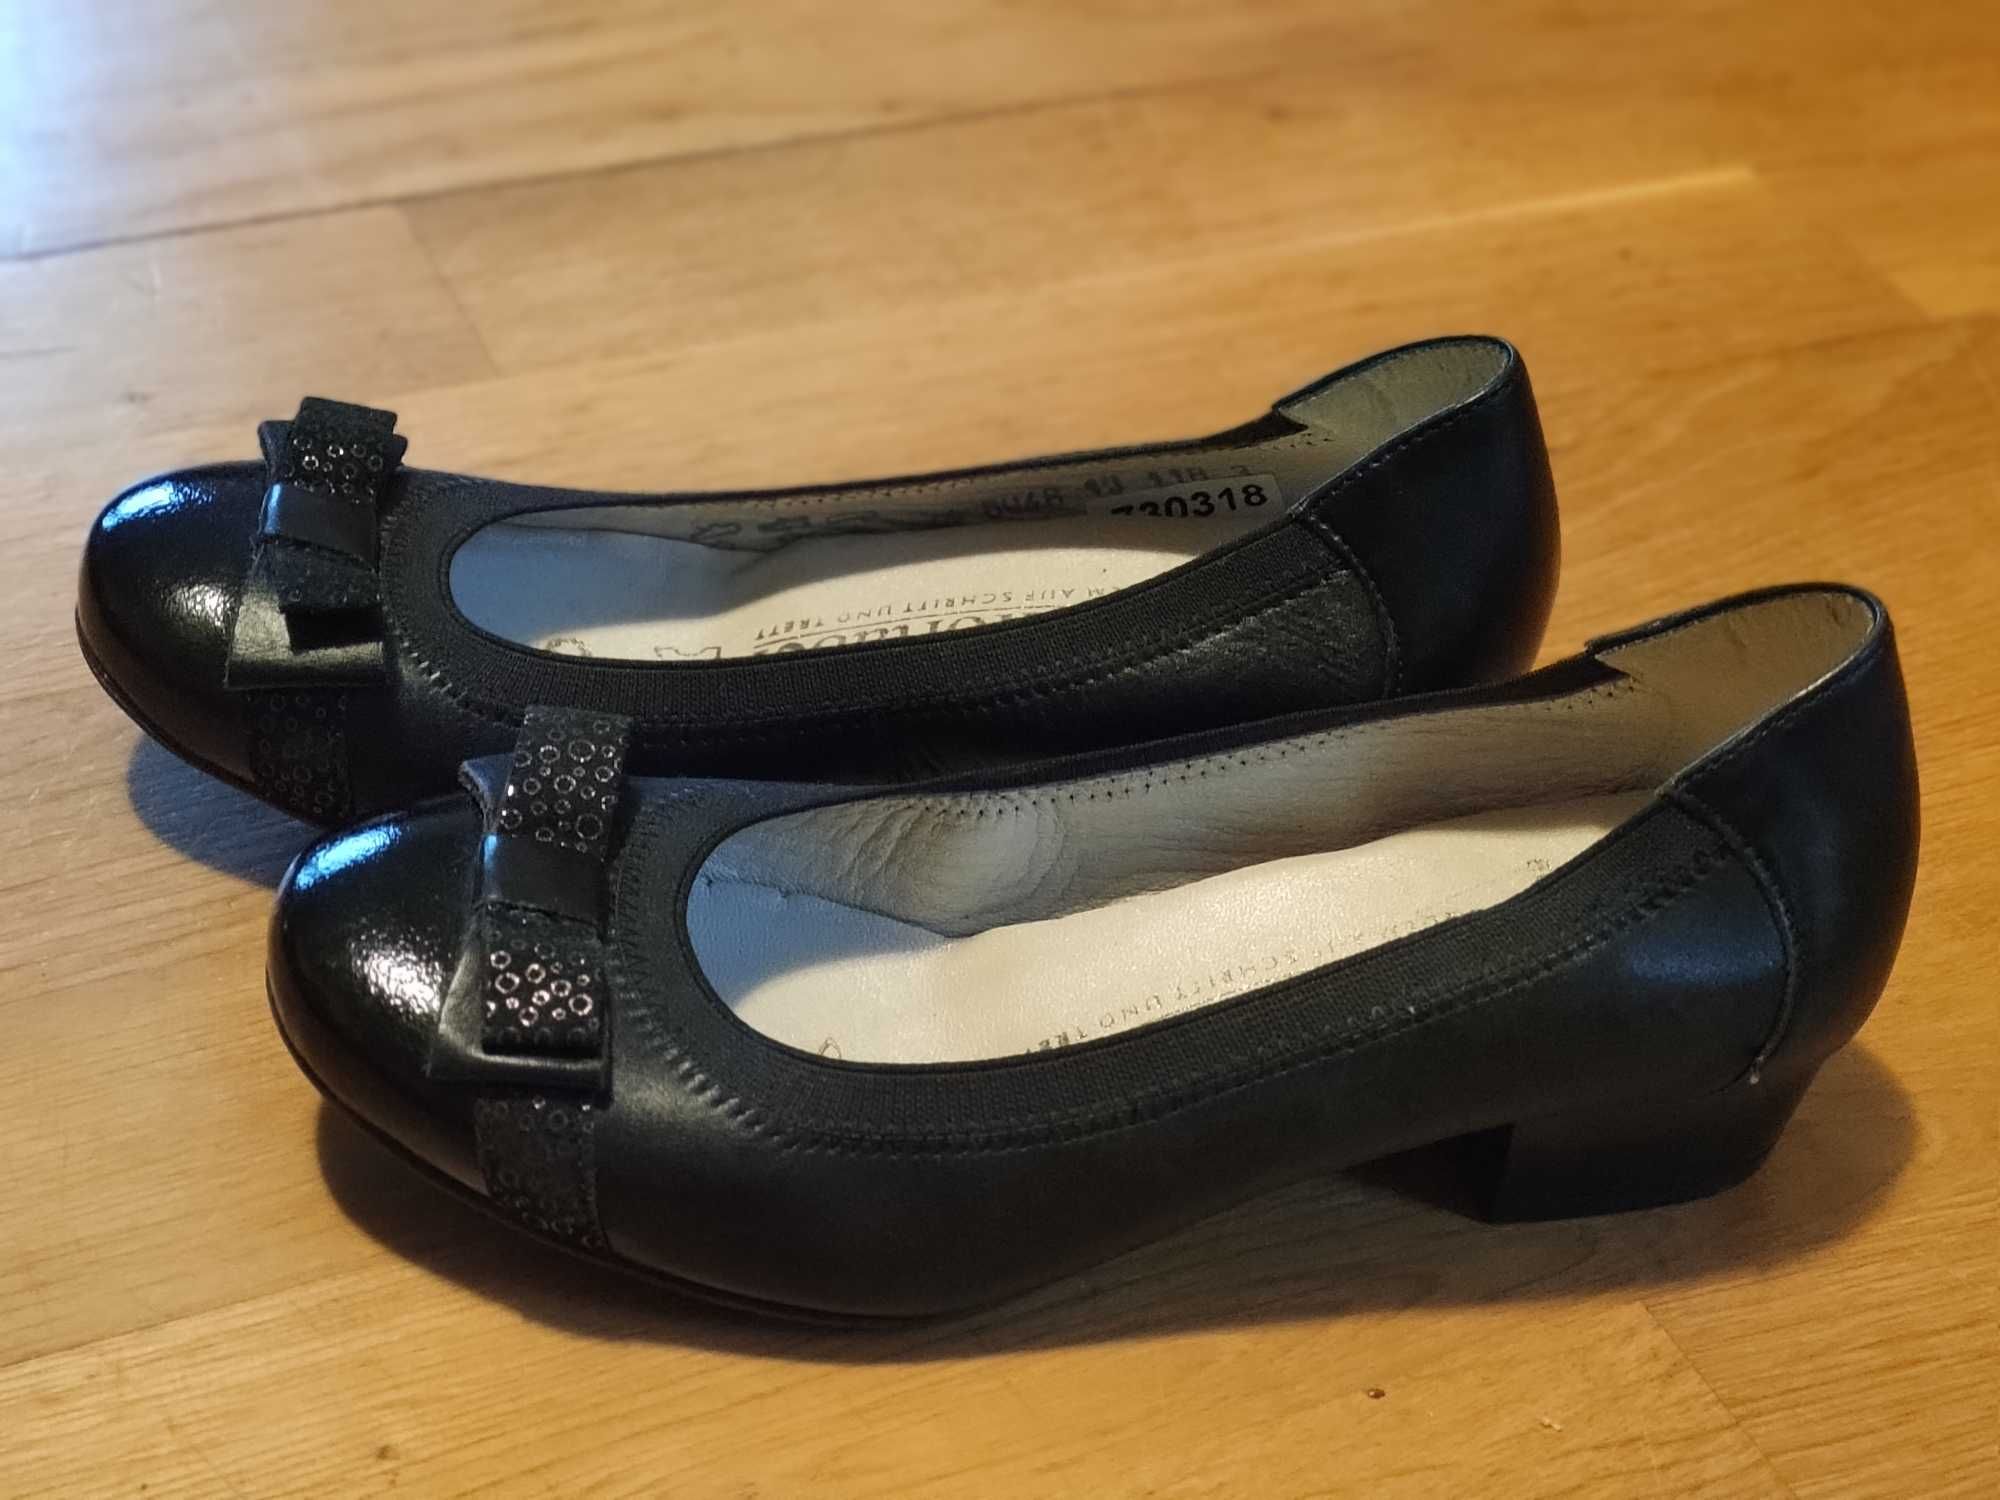 nowe czarne skórzane buty Comfortabel  rozmiar 35